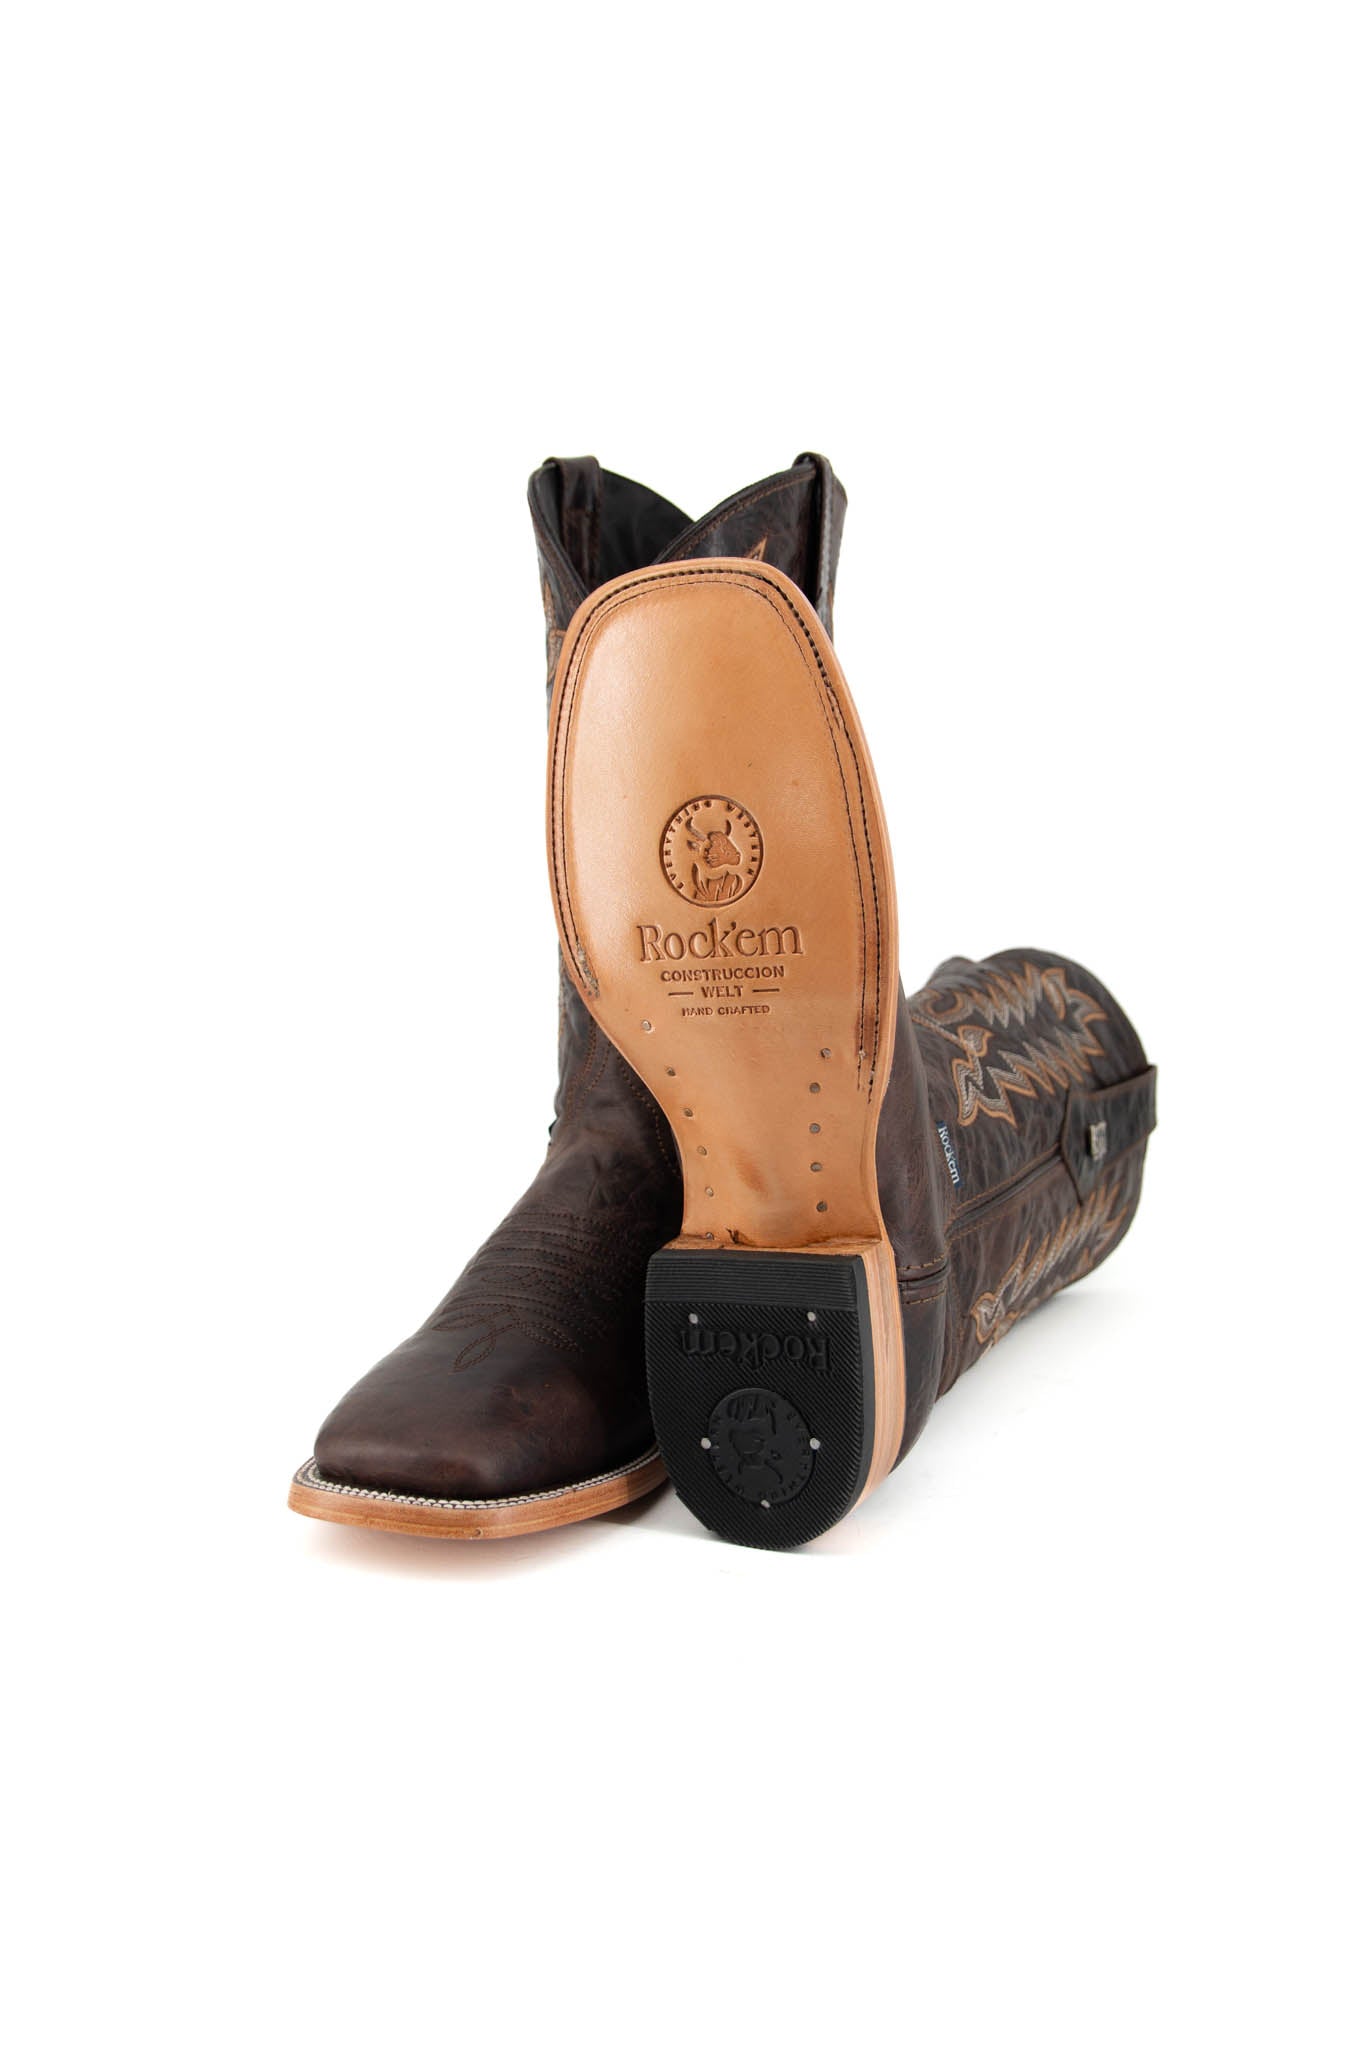 Palmitas Cedro Square Toe Cowboy Boot